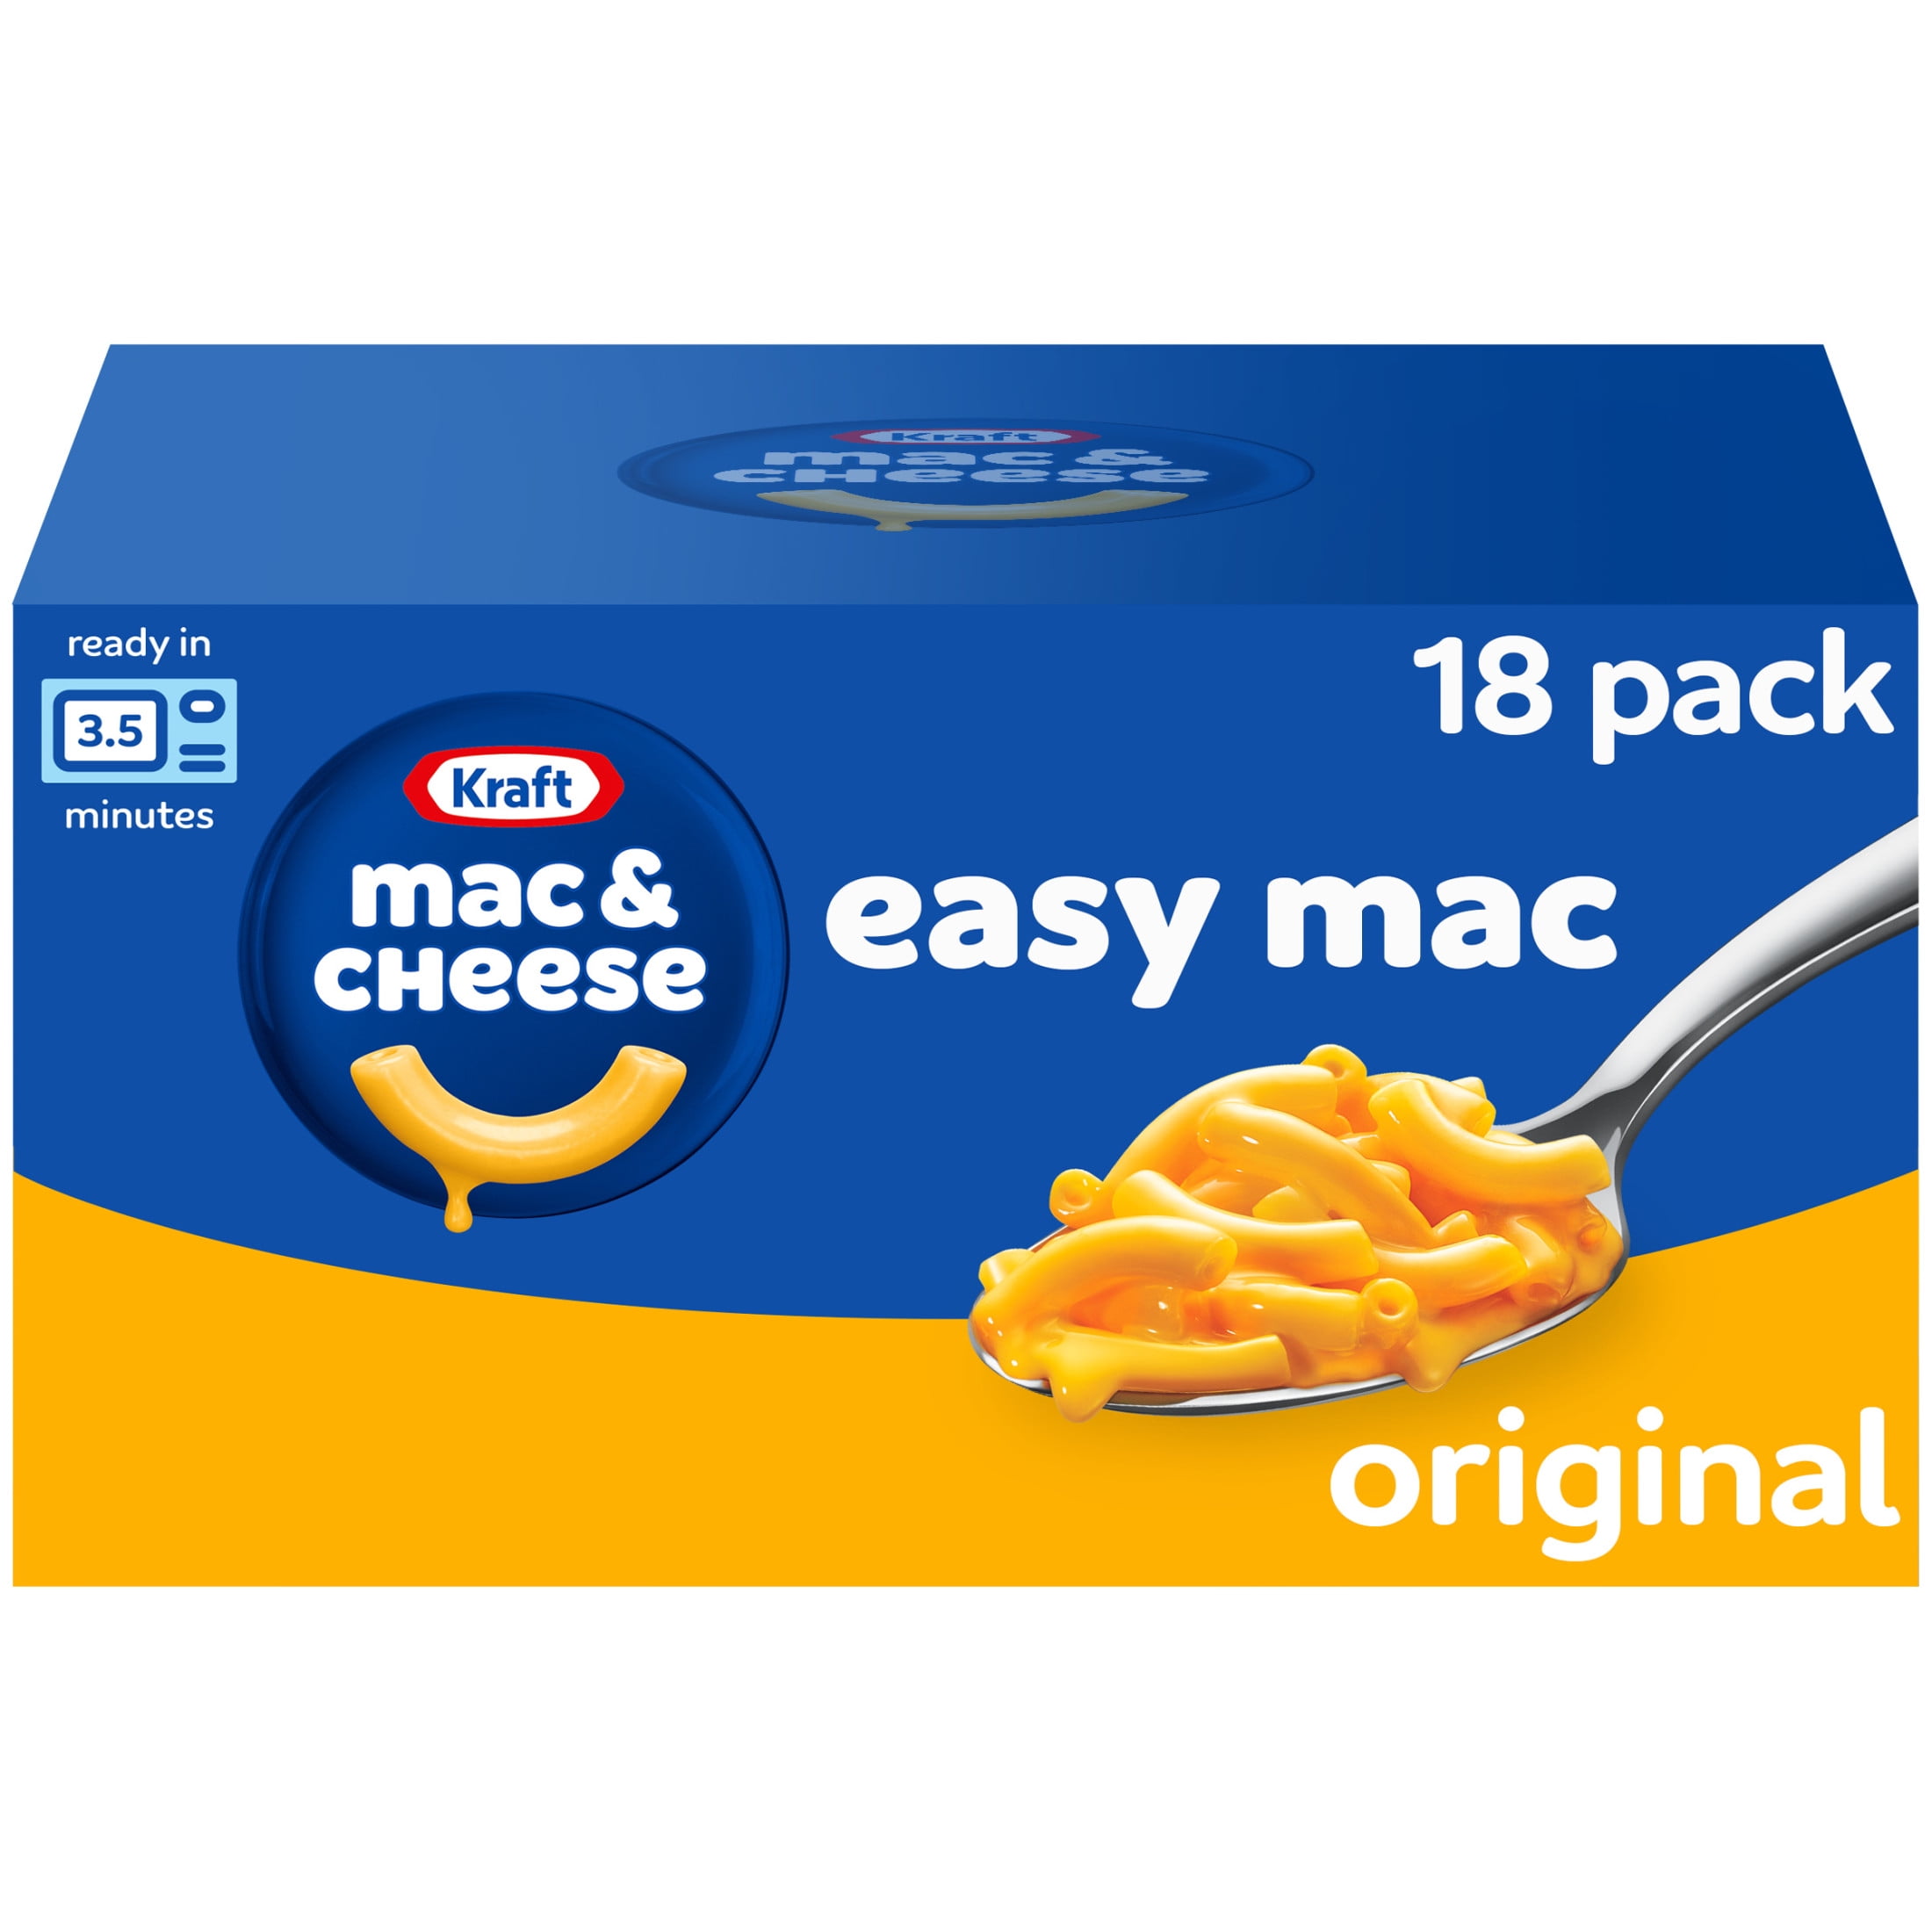 Kraft Easy Mac Original Mac N Cheese Macaroni and Cheese